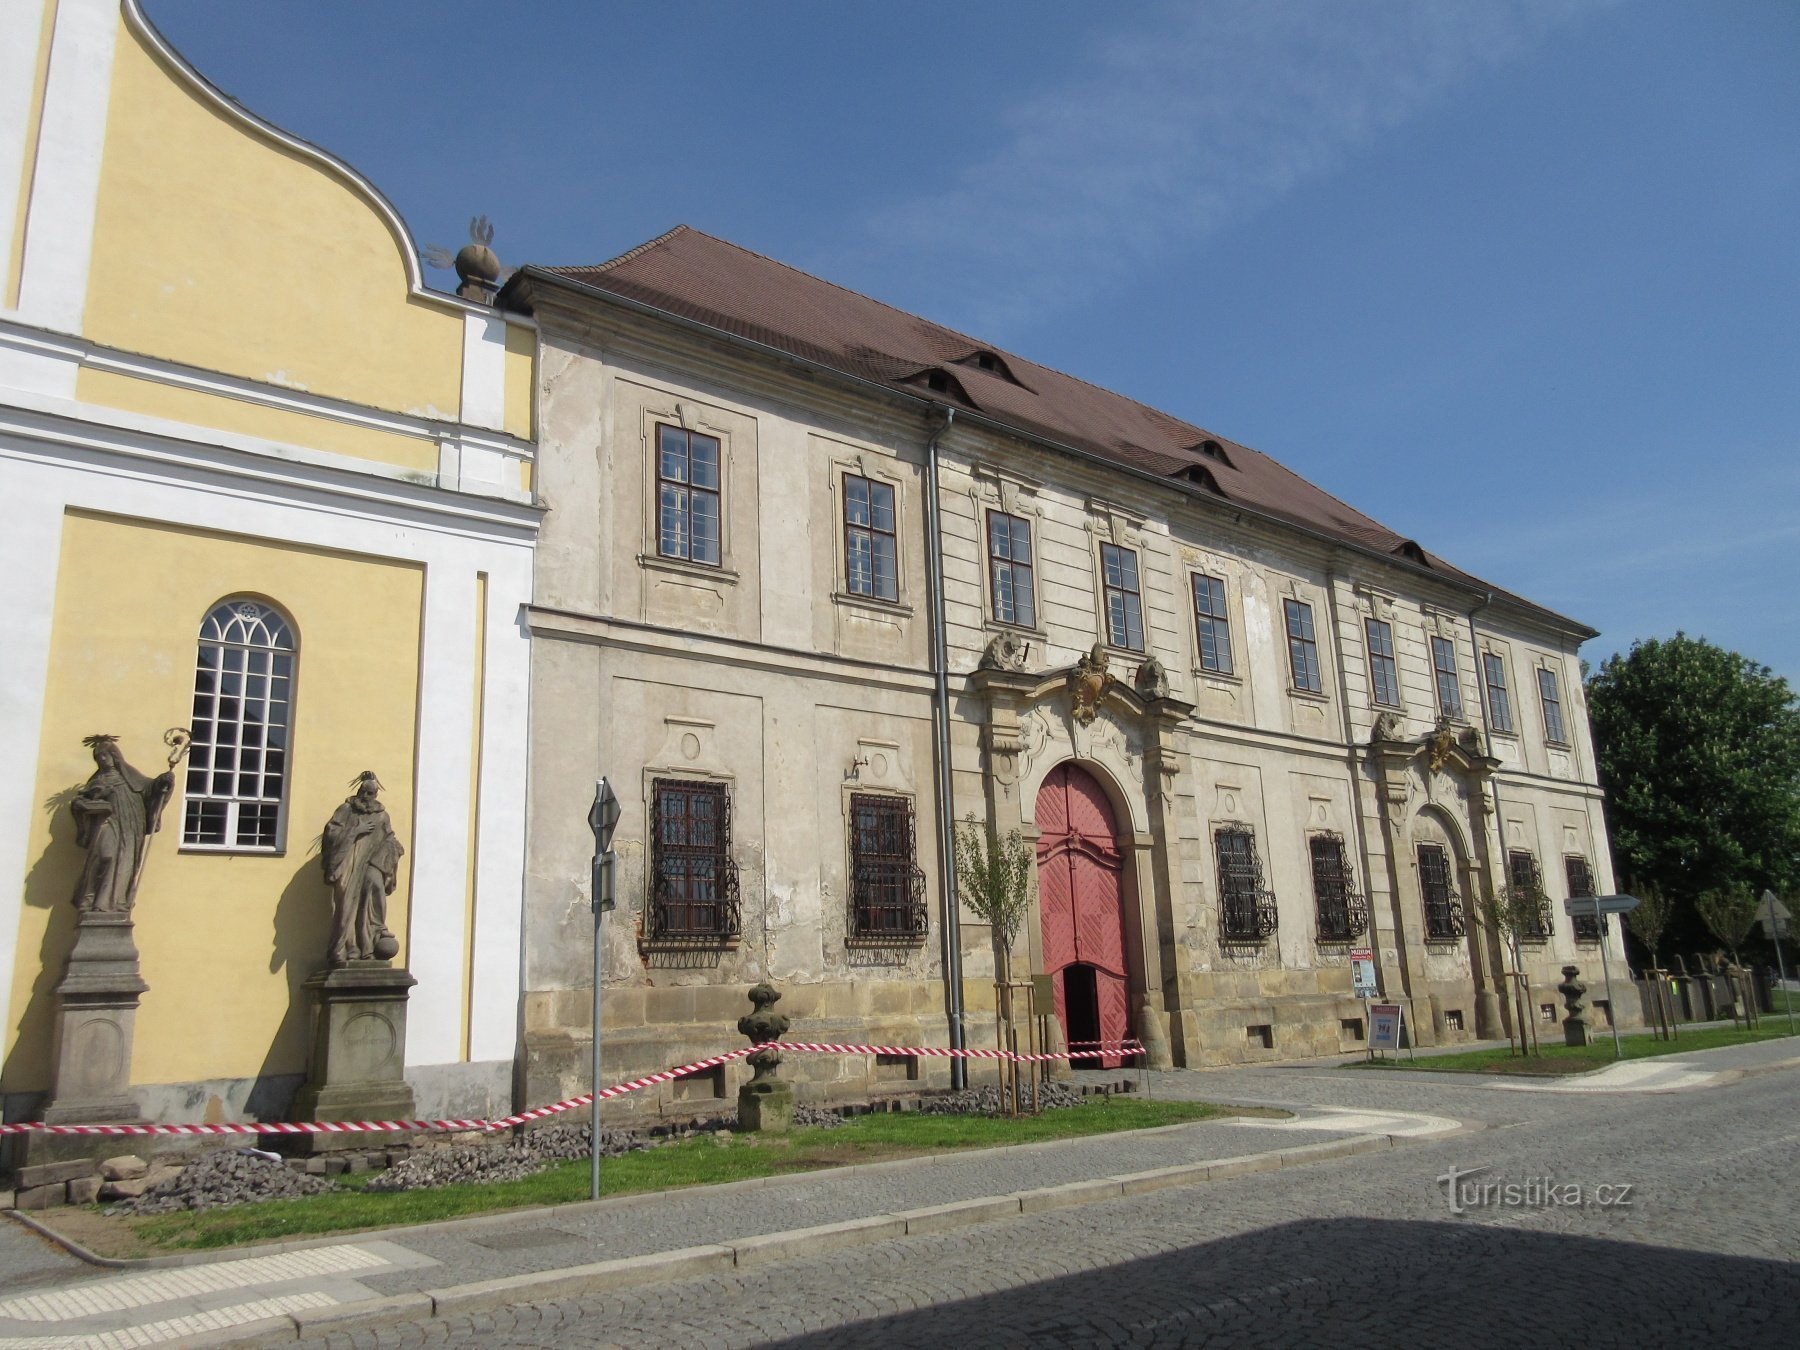 Manastir - danas muzej